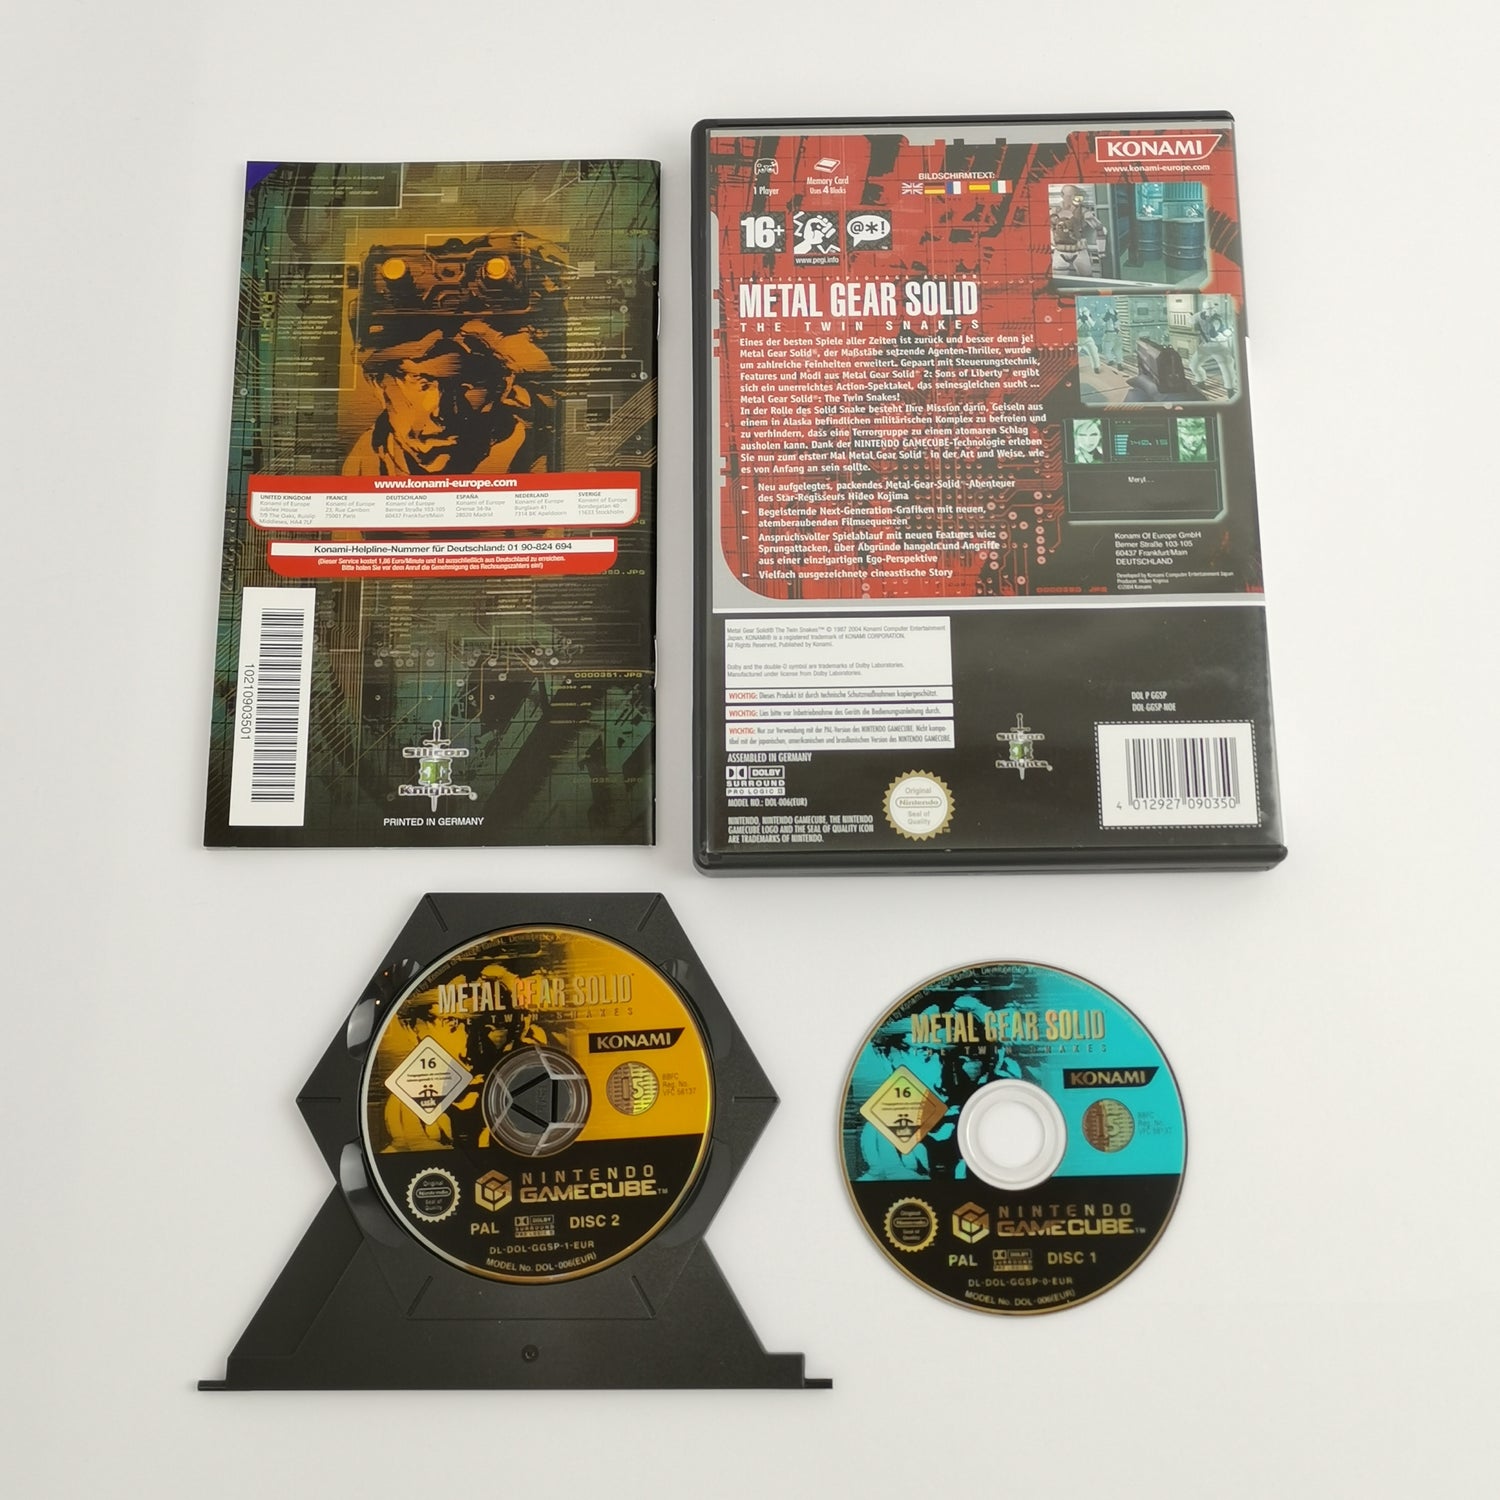 Nintendo Gamecube Game: Metal Gear Solid The Twin Snakes | Hideo Kojima - original packaging